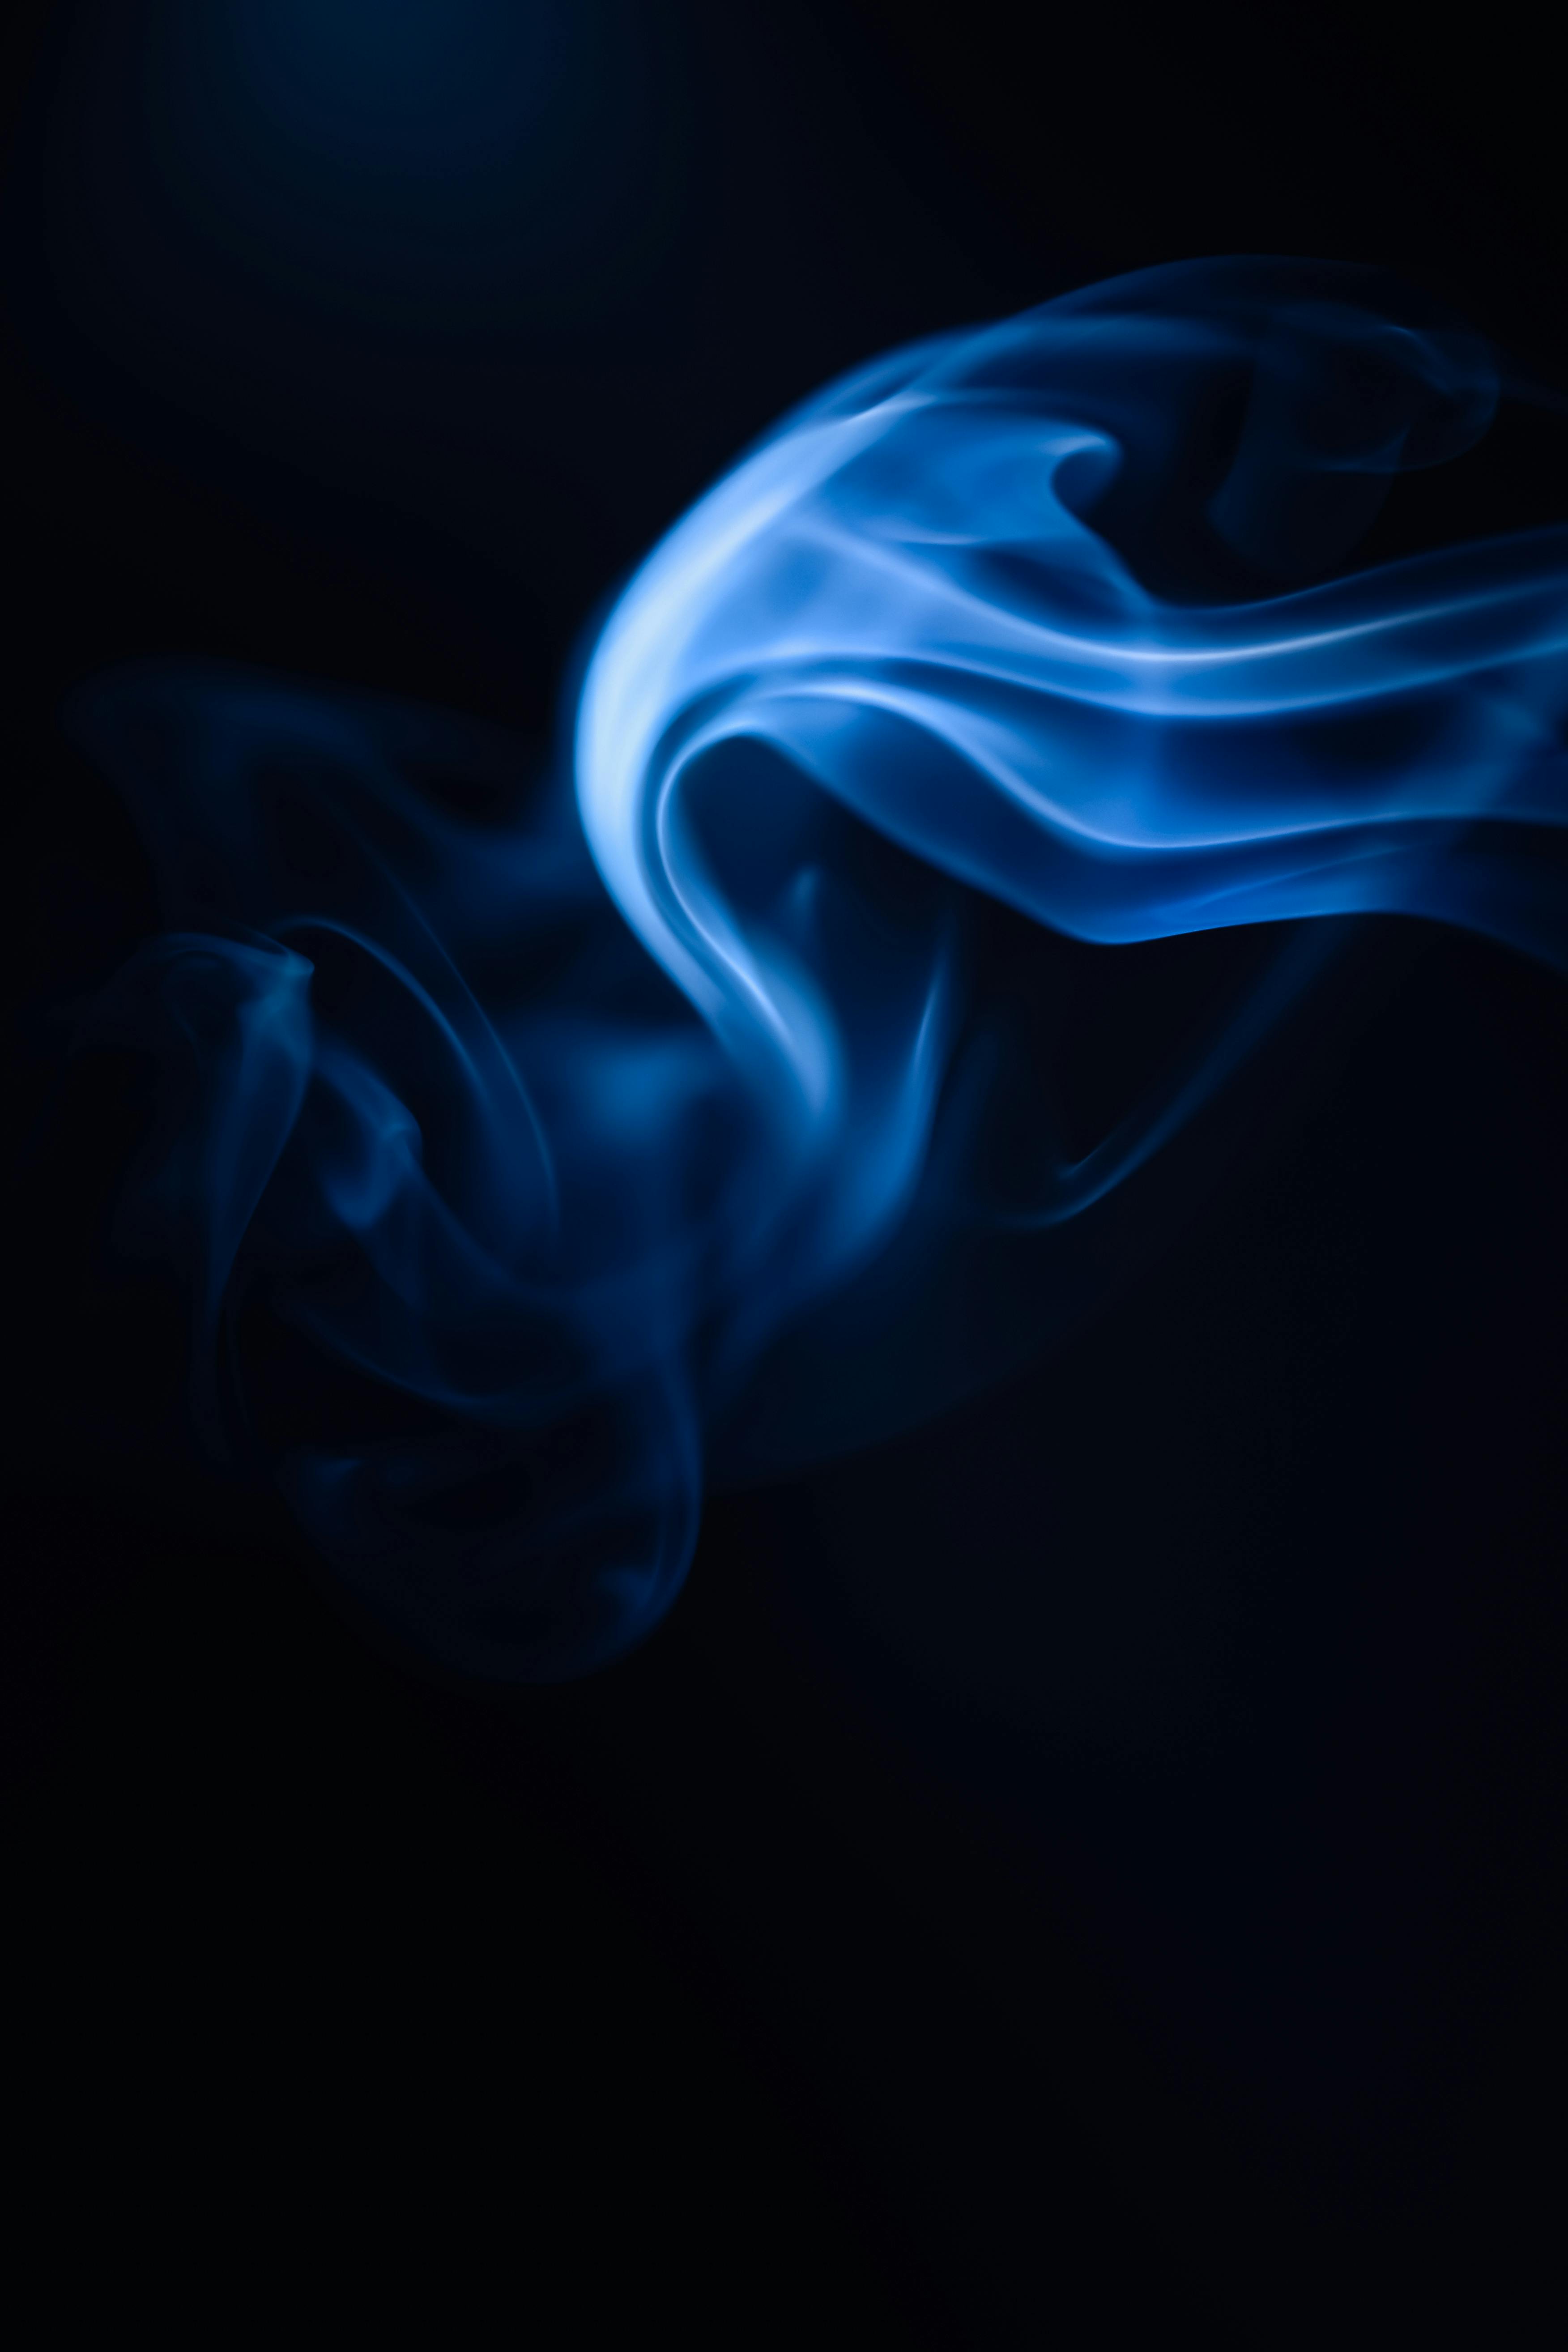 Blue and White Smoke Background · Free Stock Photo